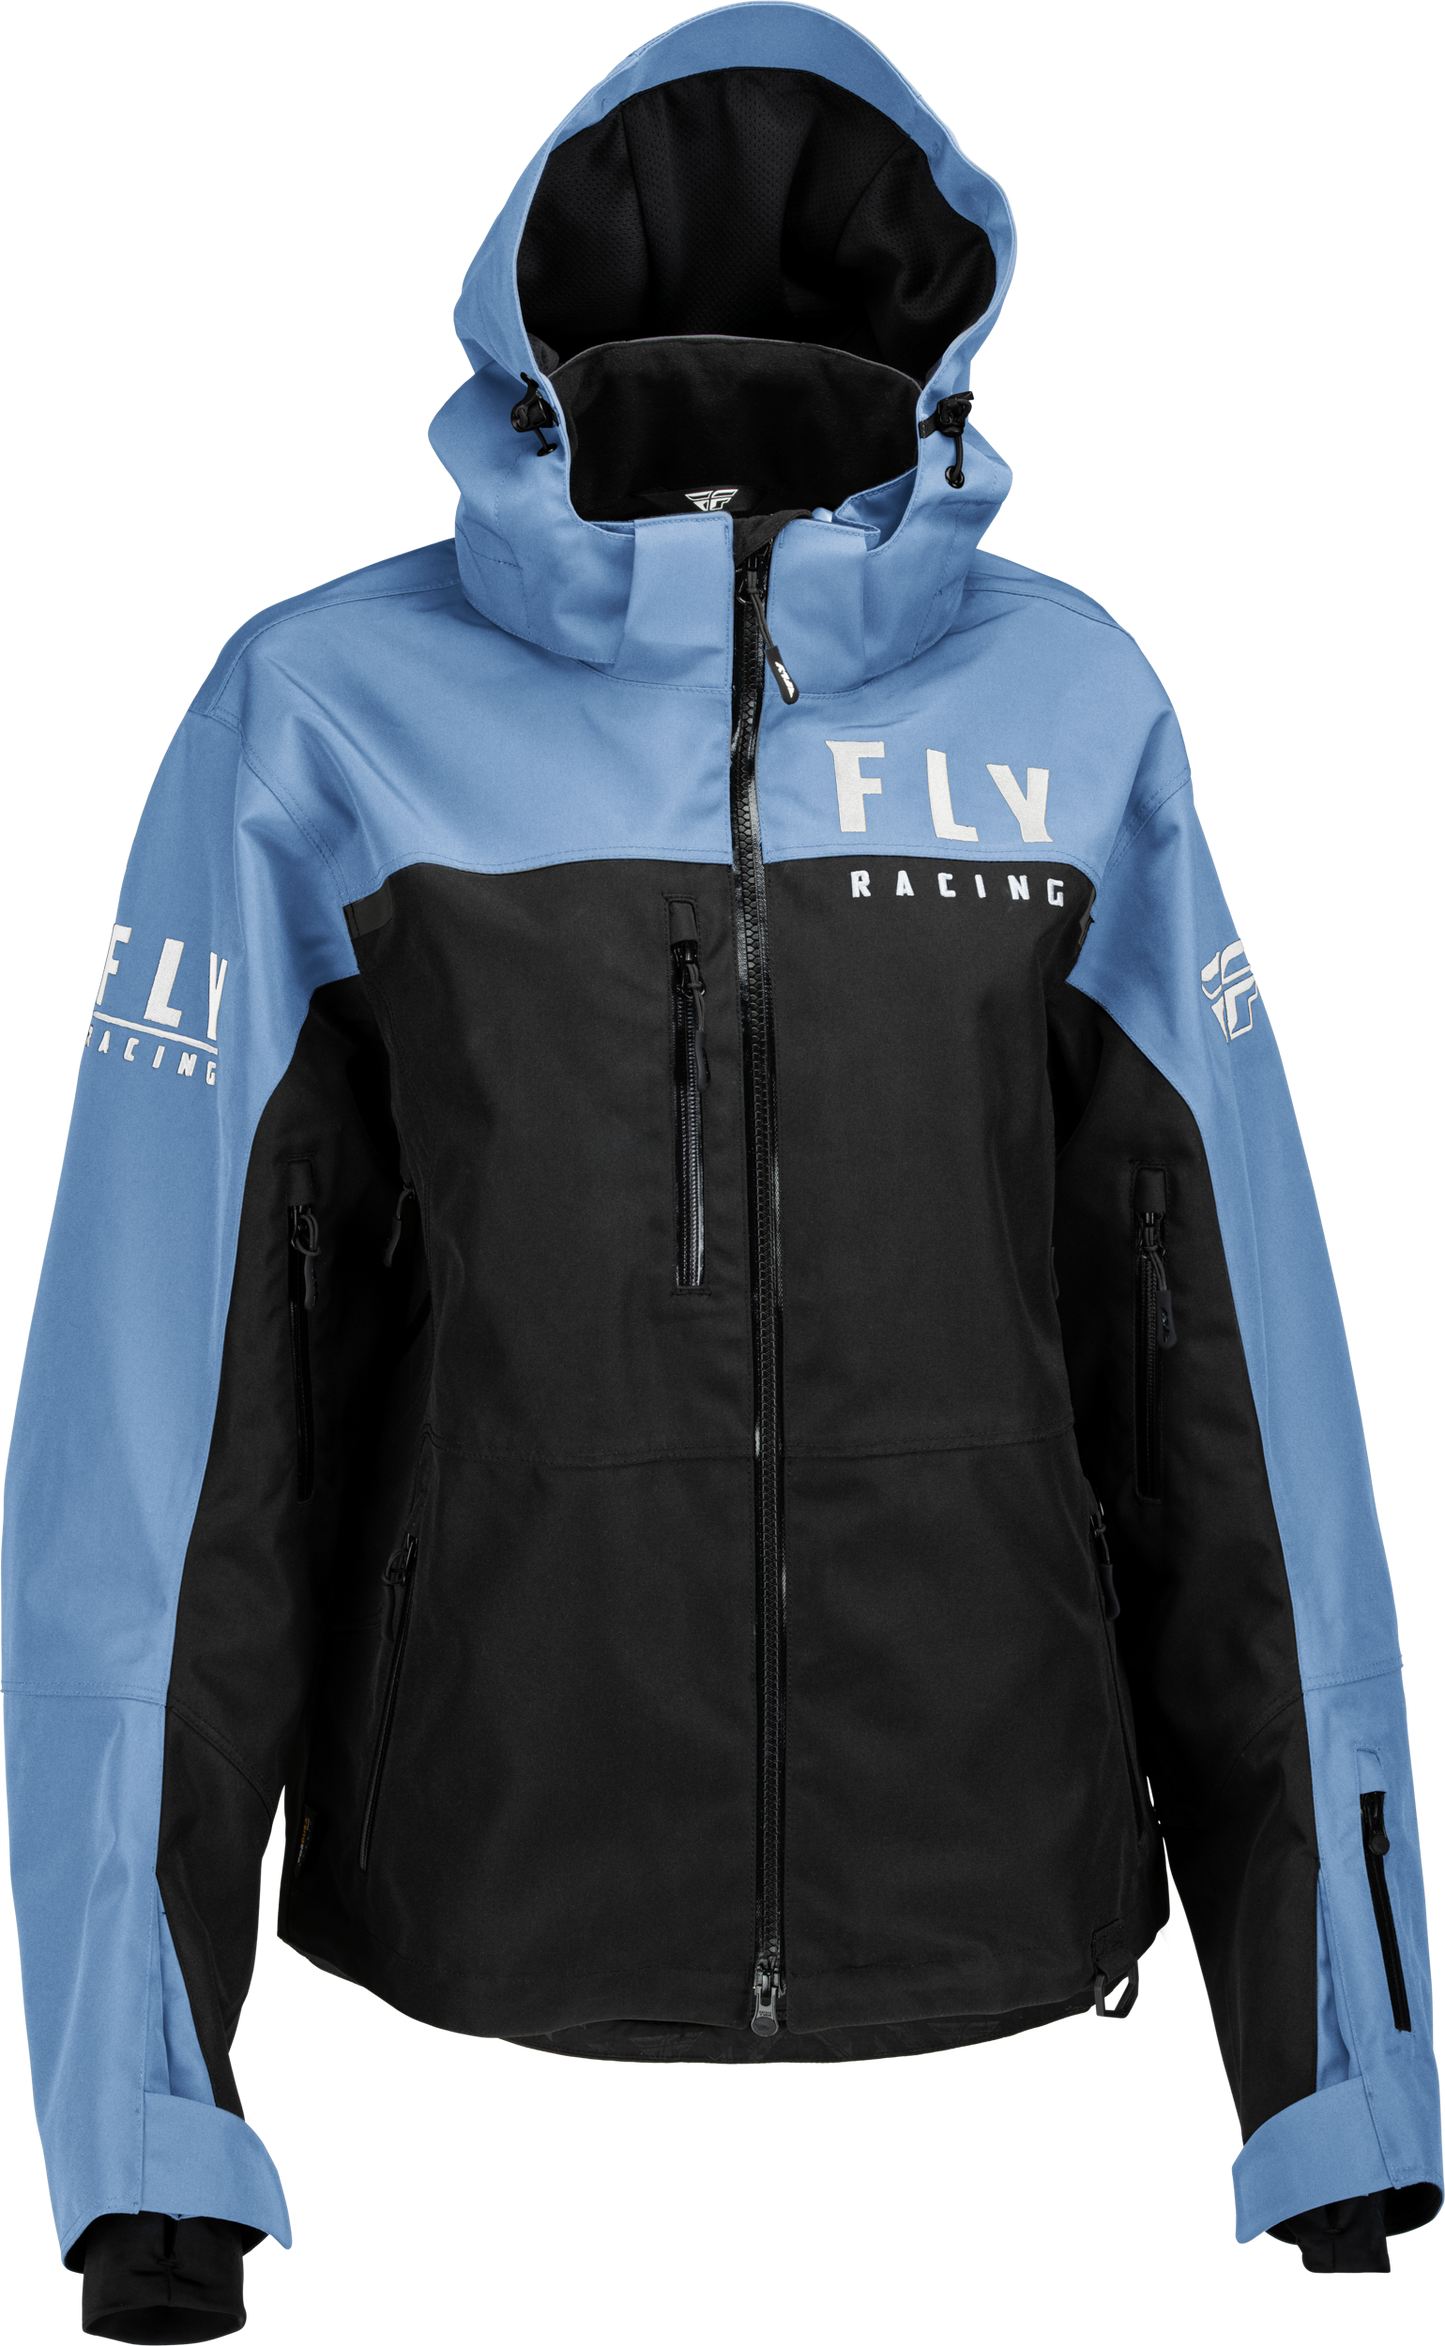 FLY RACING Women's Carbon Jacket Black/Blue 3x 470-45013X